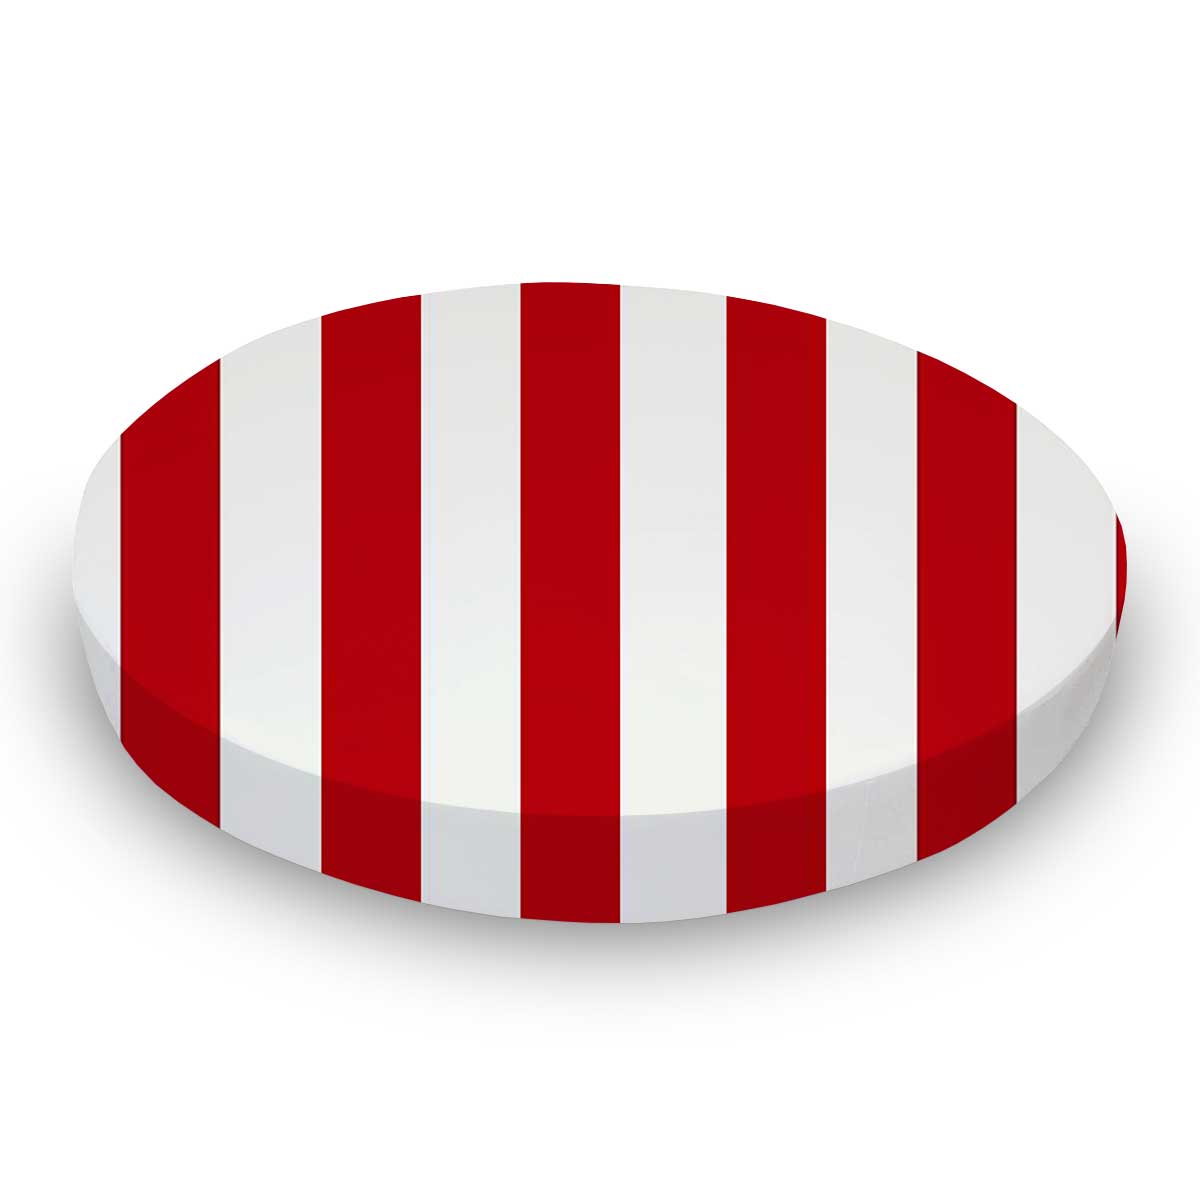 Oval Crib (Stokke Sleepi) - Red Stripe - Fitted  Oval